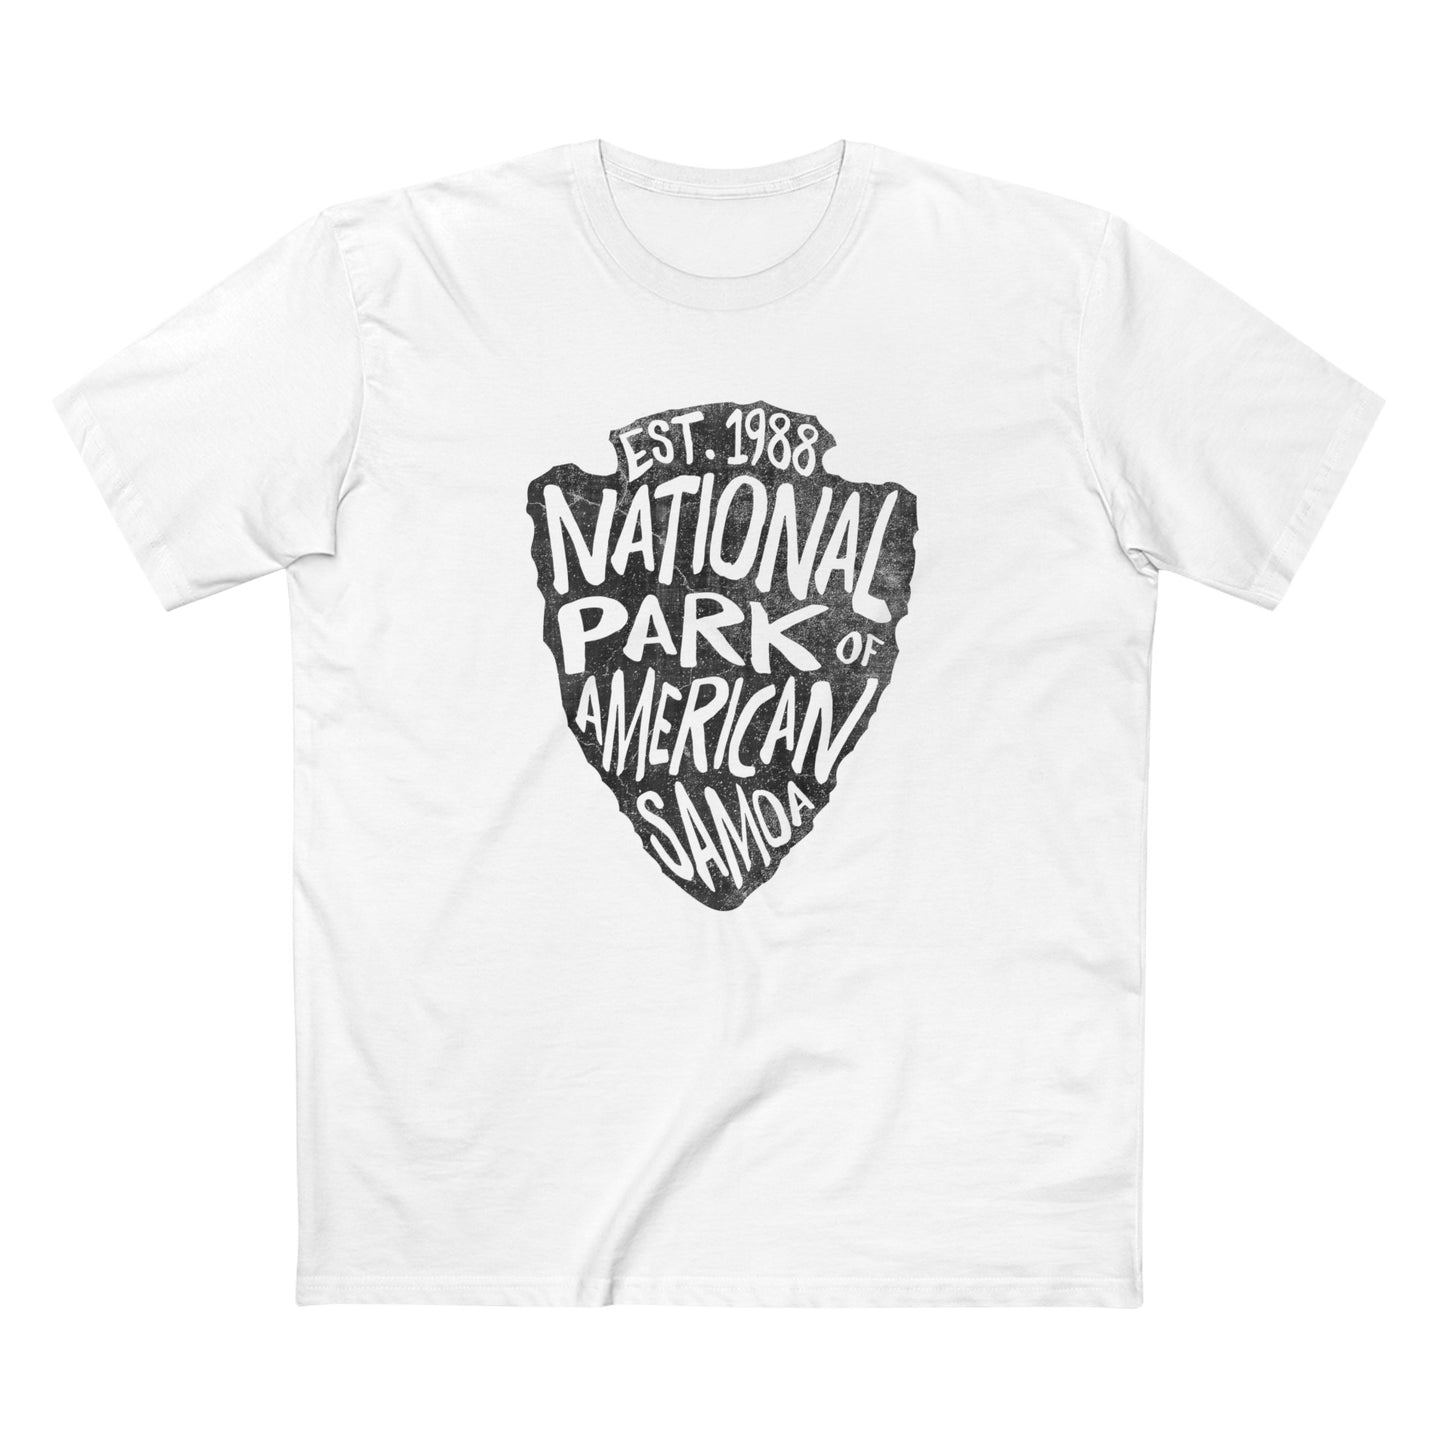 National Park of American Samoa T-Shirt - Arrowhead Design